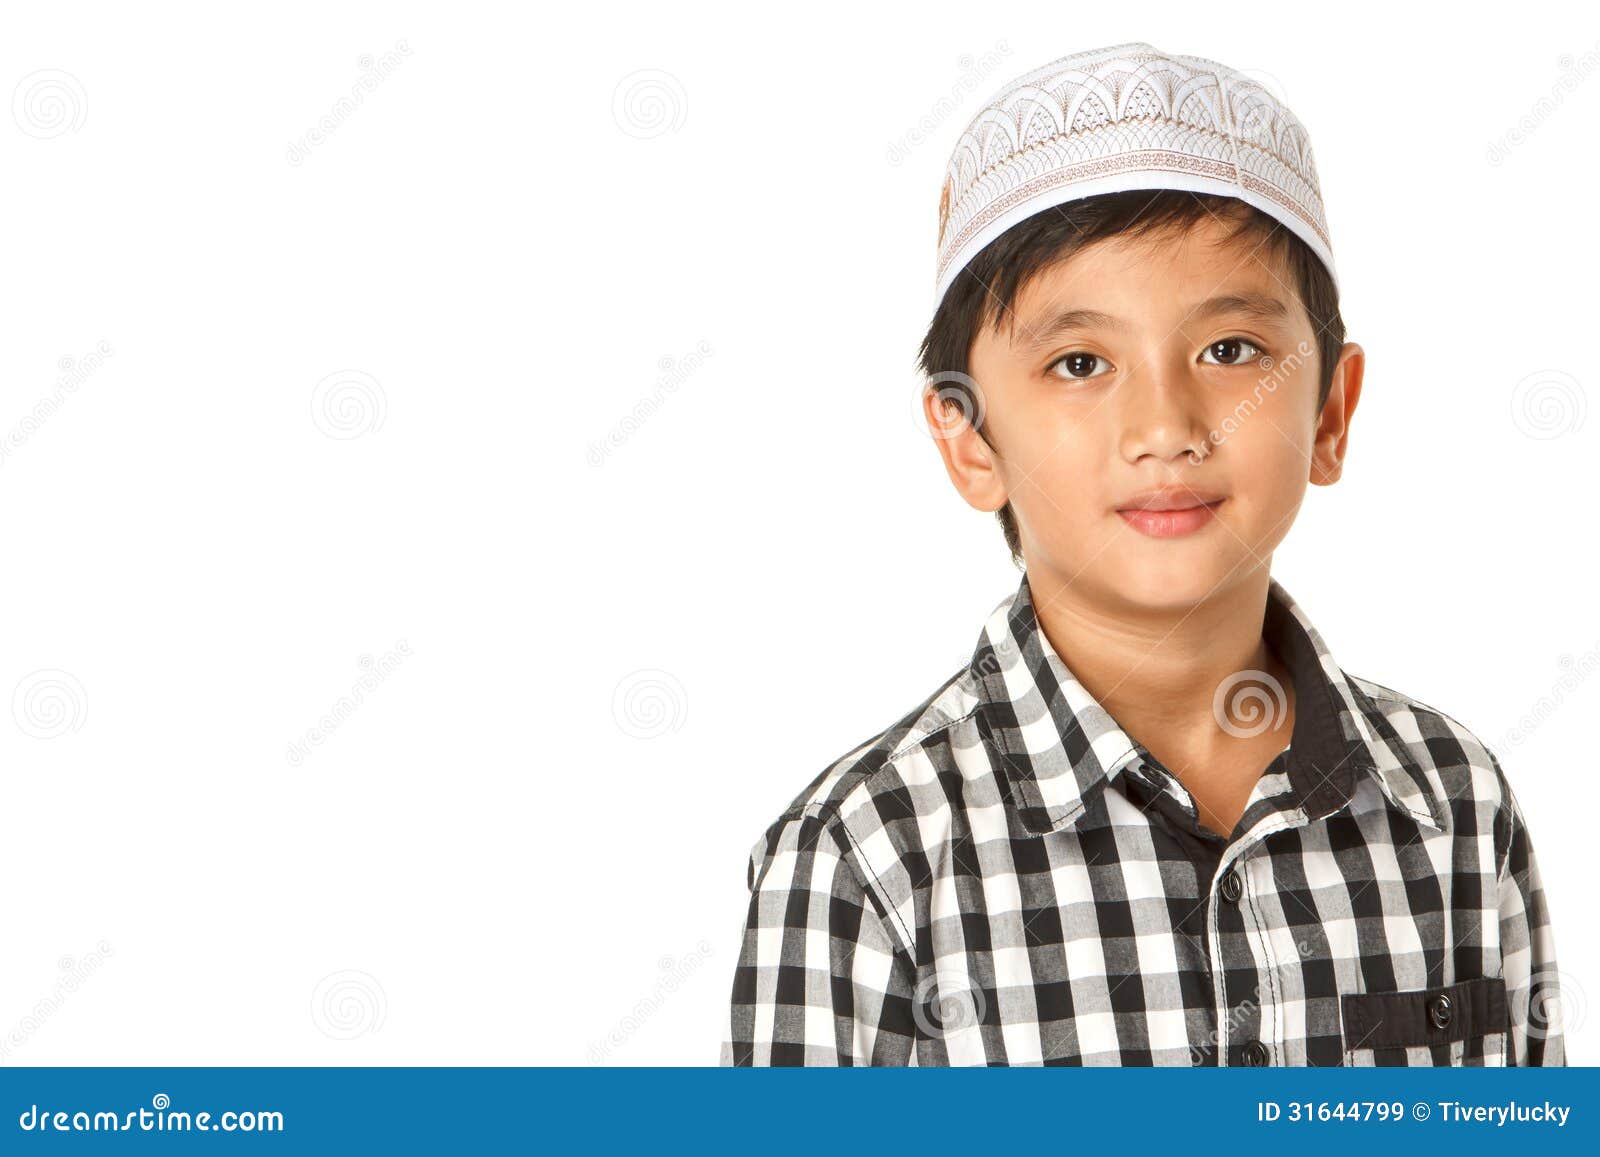 Islamic Boys Royalty Free Stock Images - Image: 31644799